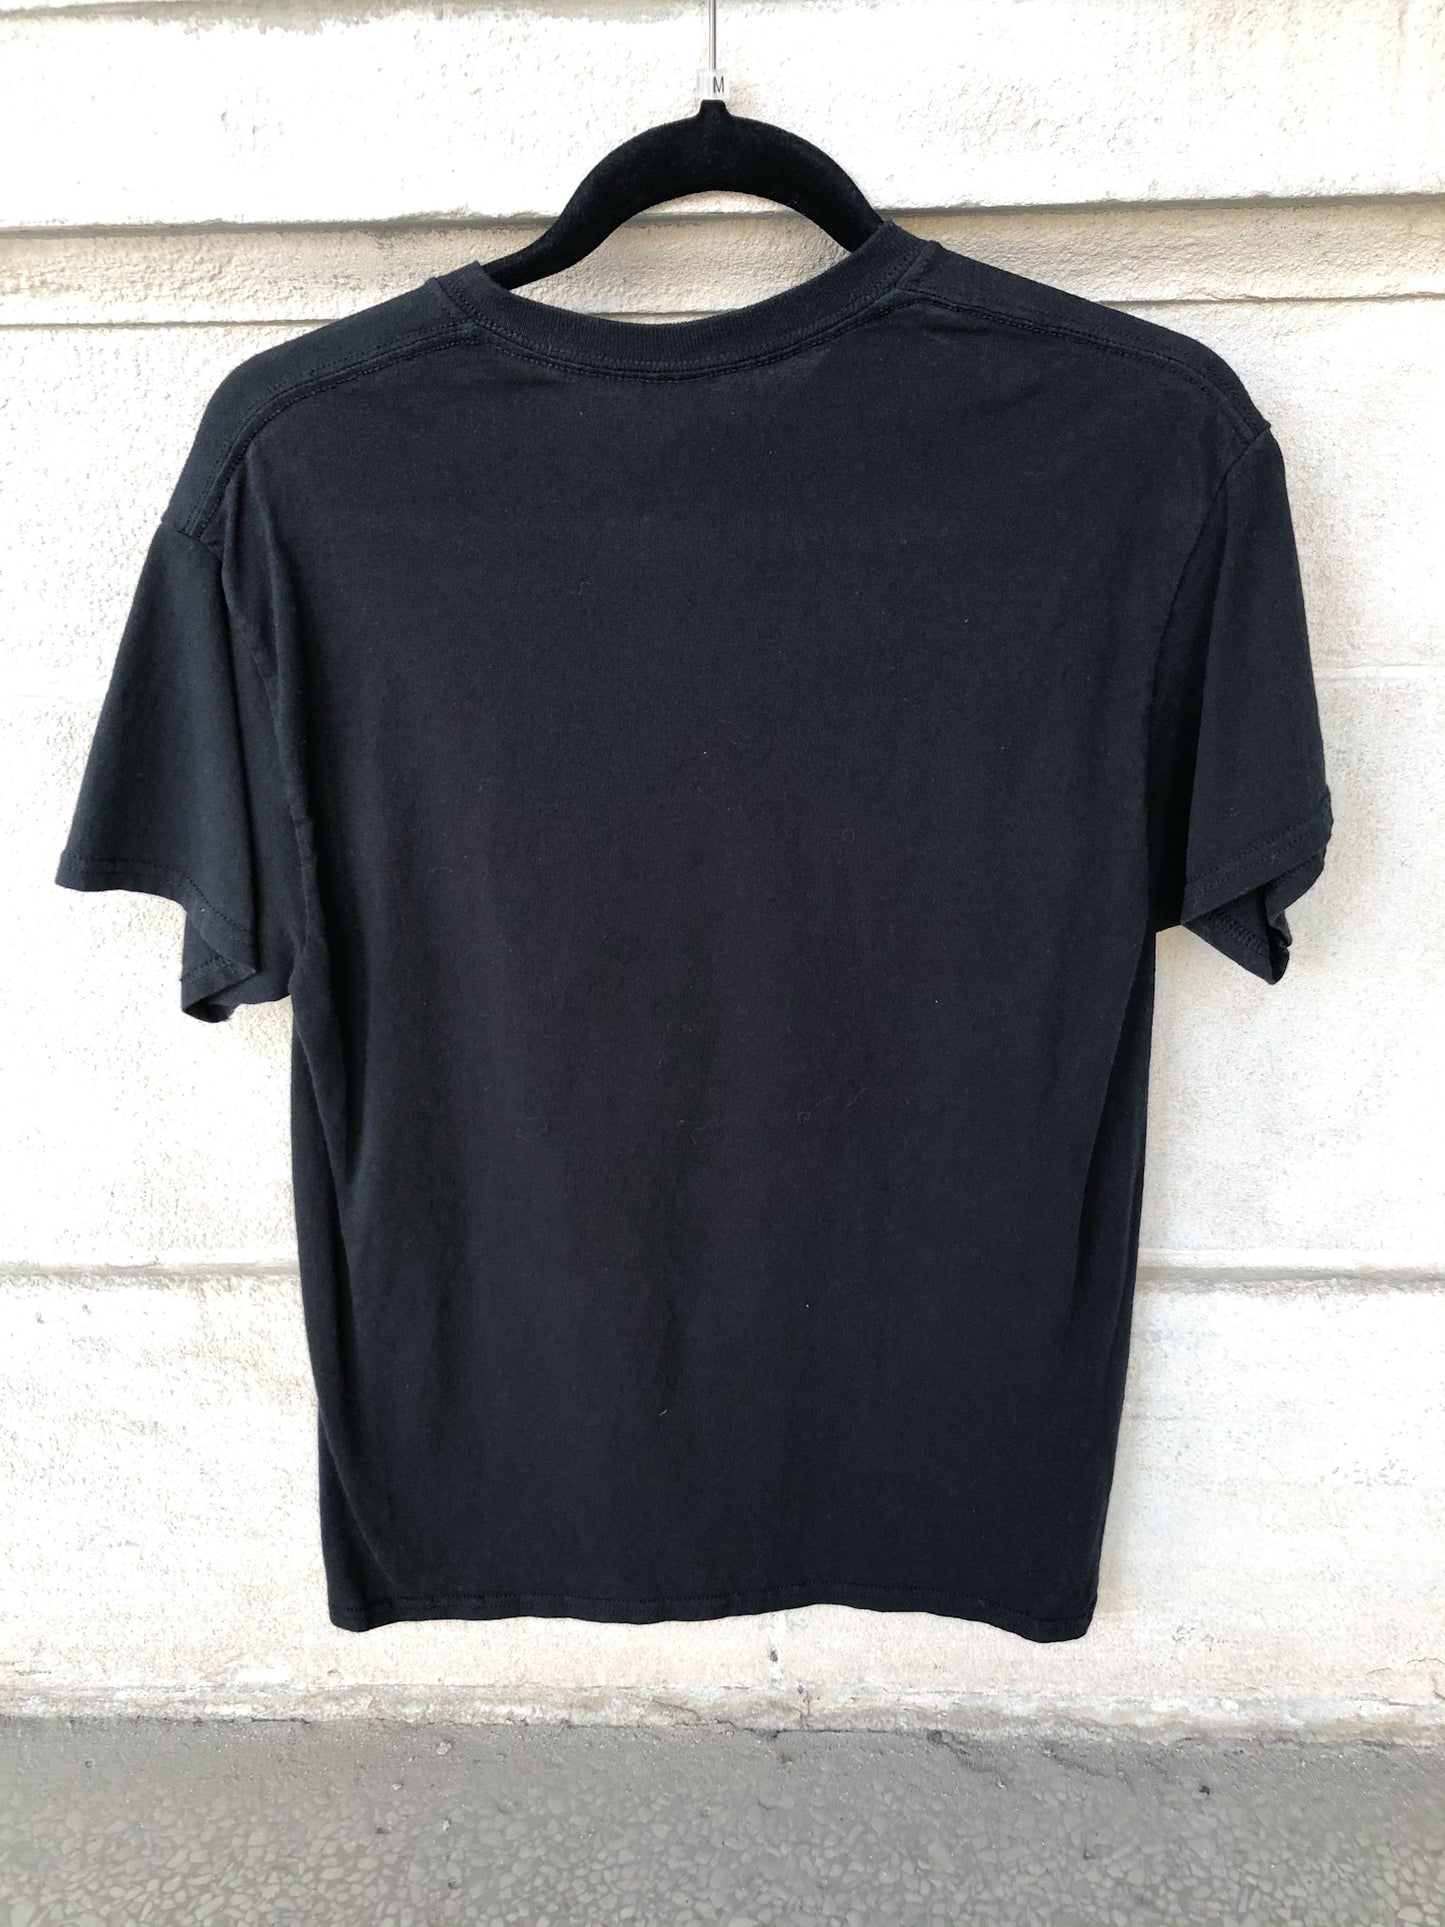 Nova Scotia Anchor Black Graphic 100% Cotton T-Shirt - Medium